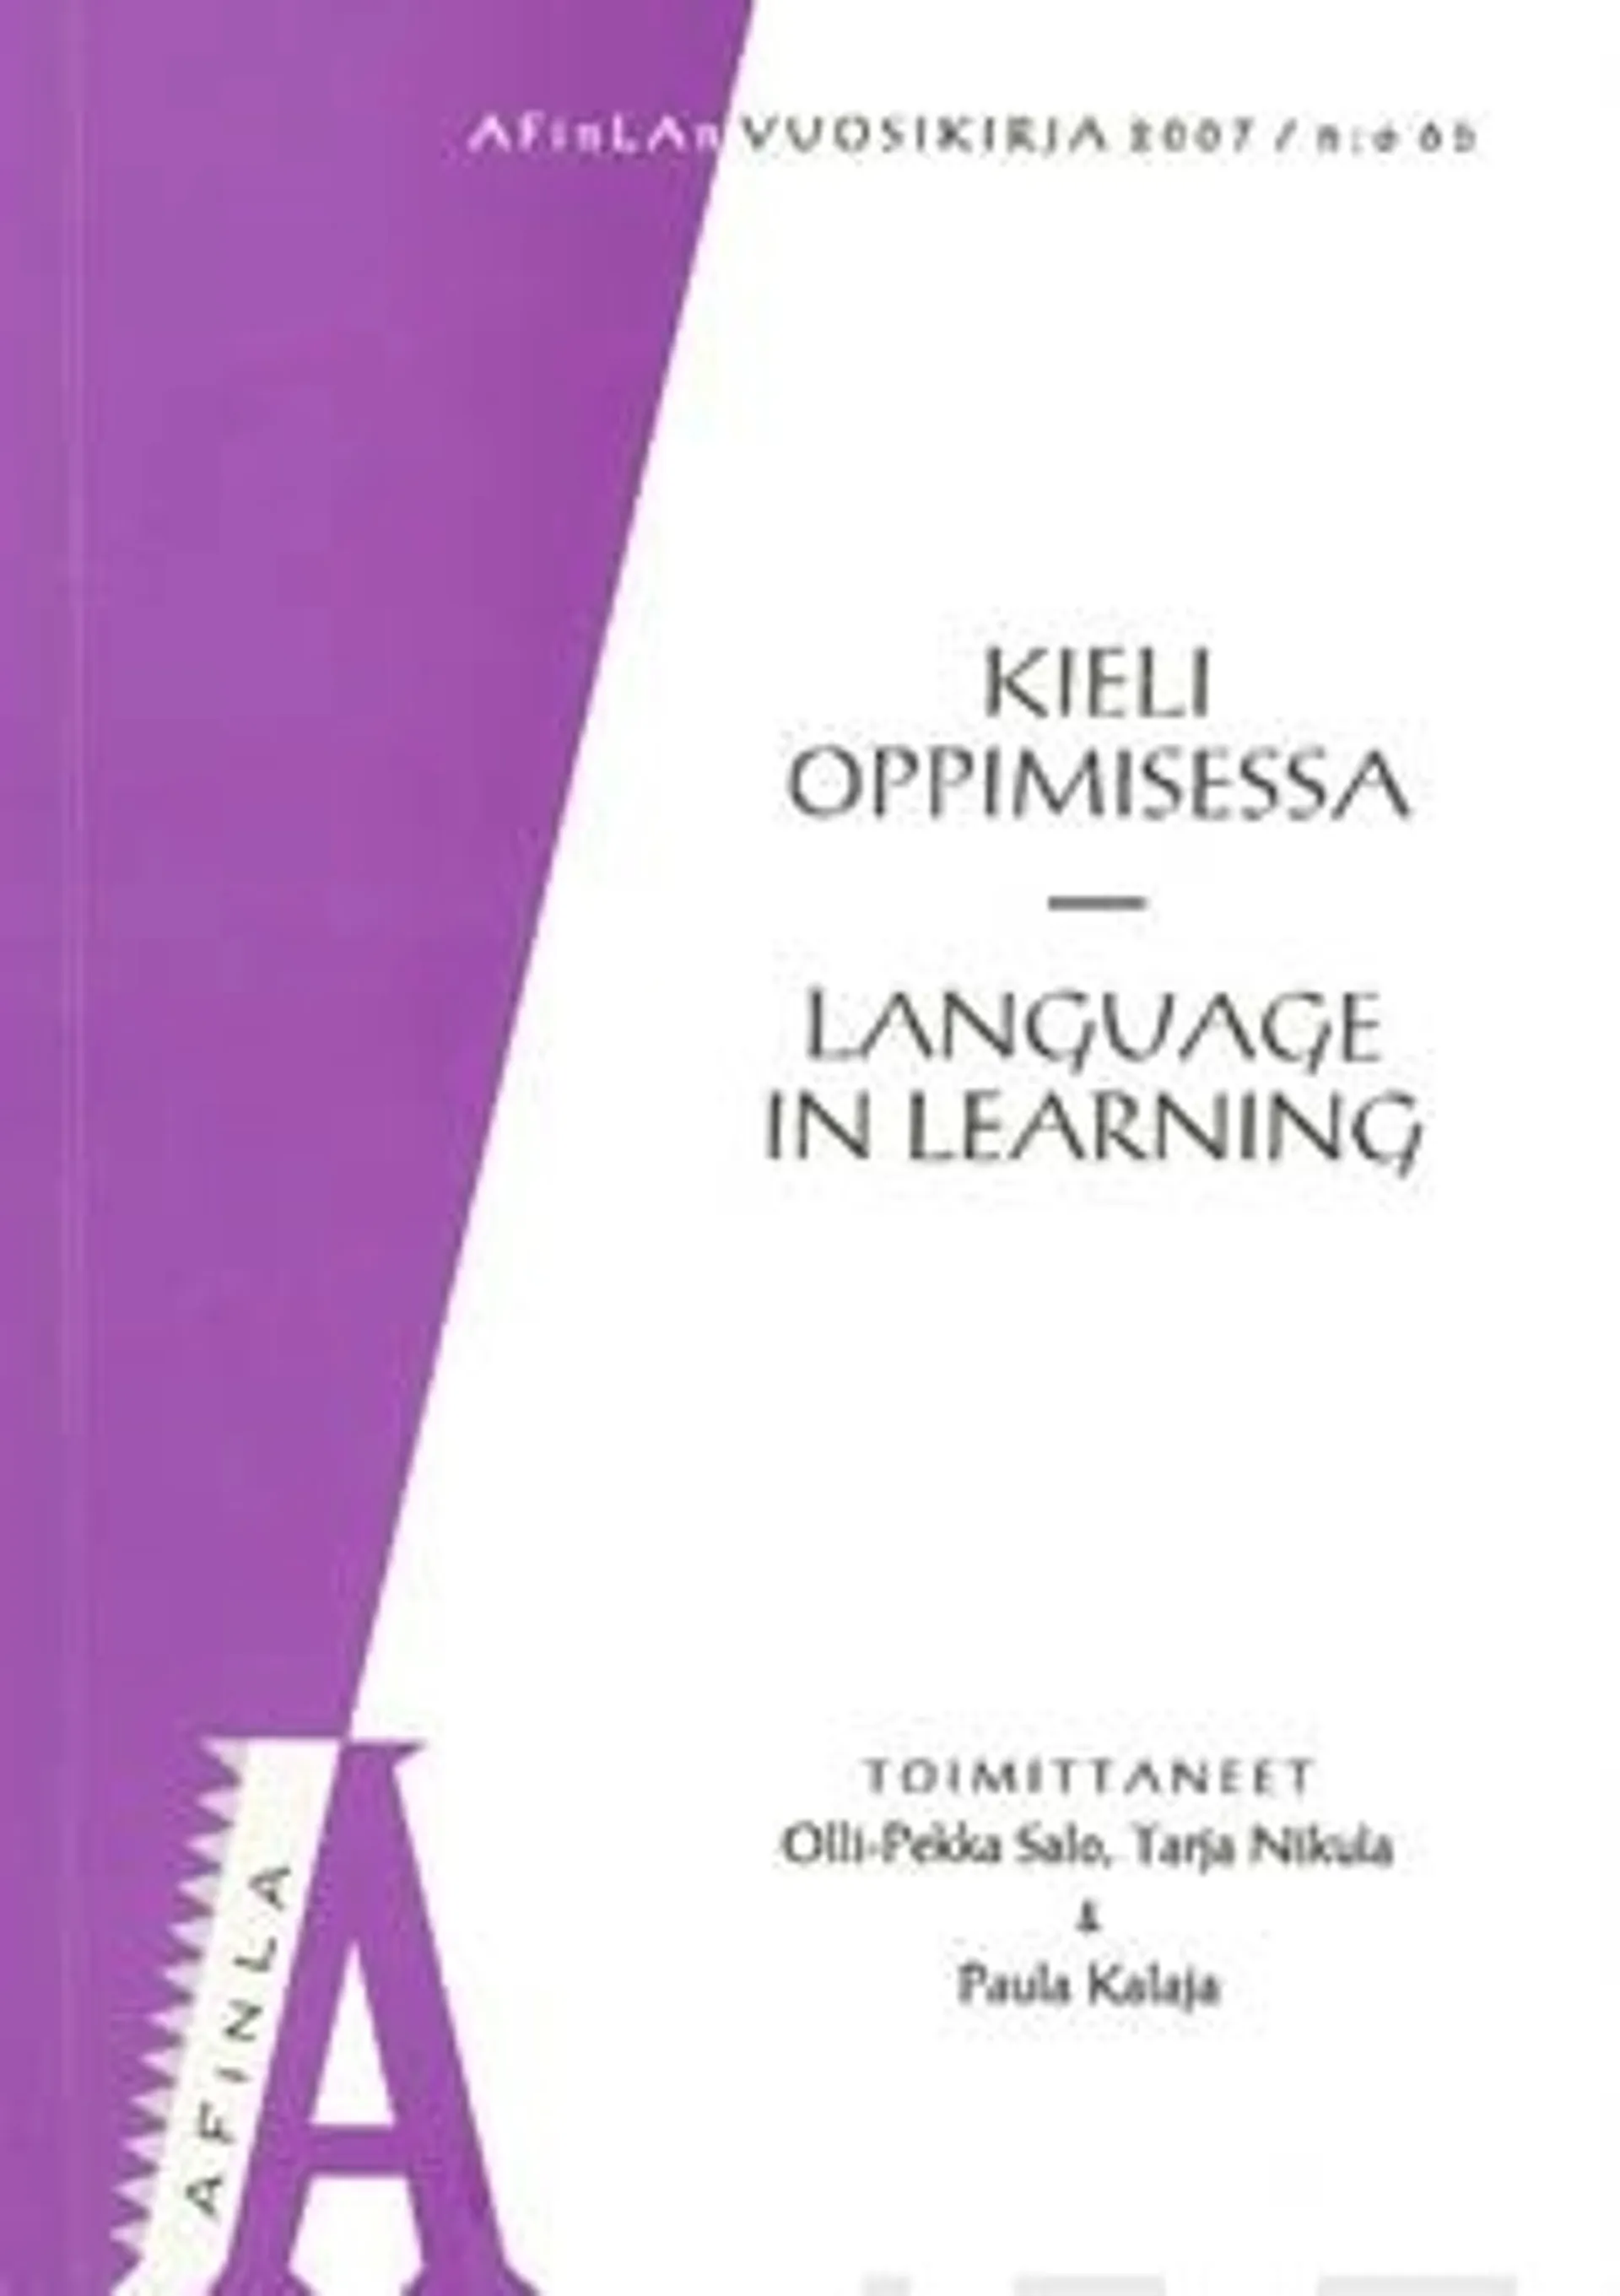 Kieli oppimisessa